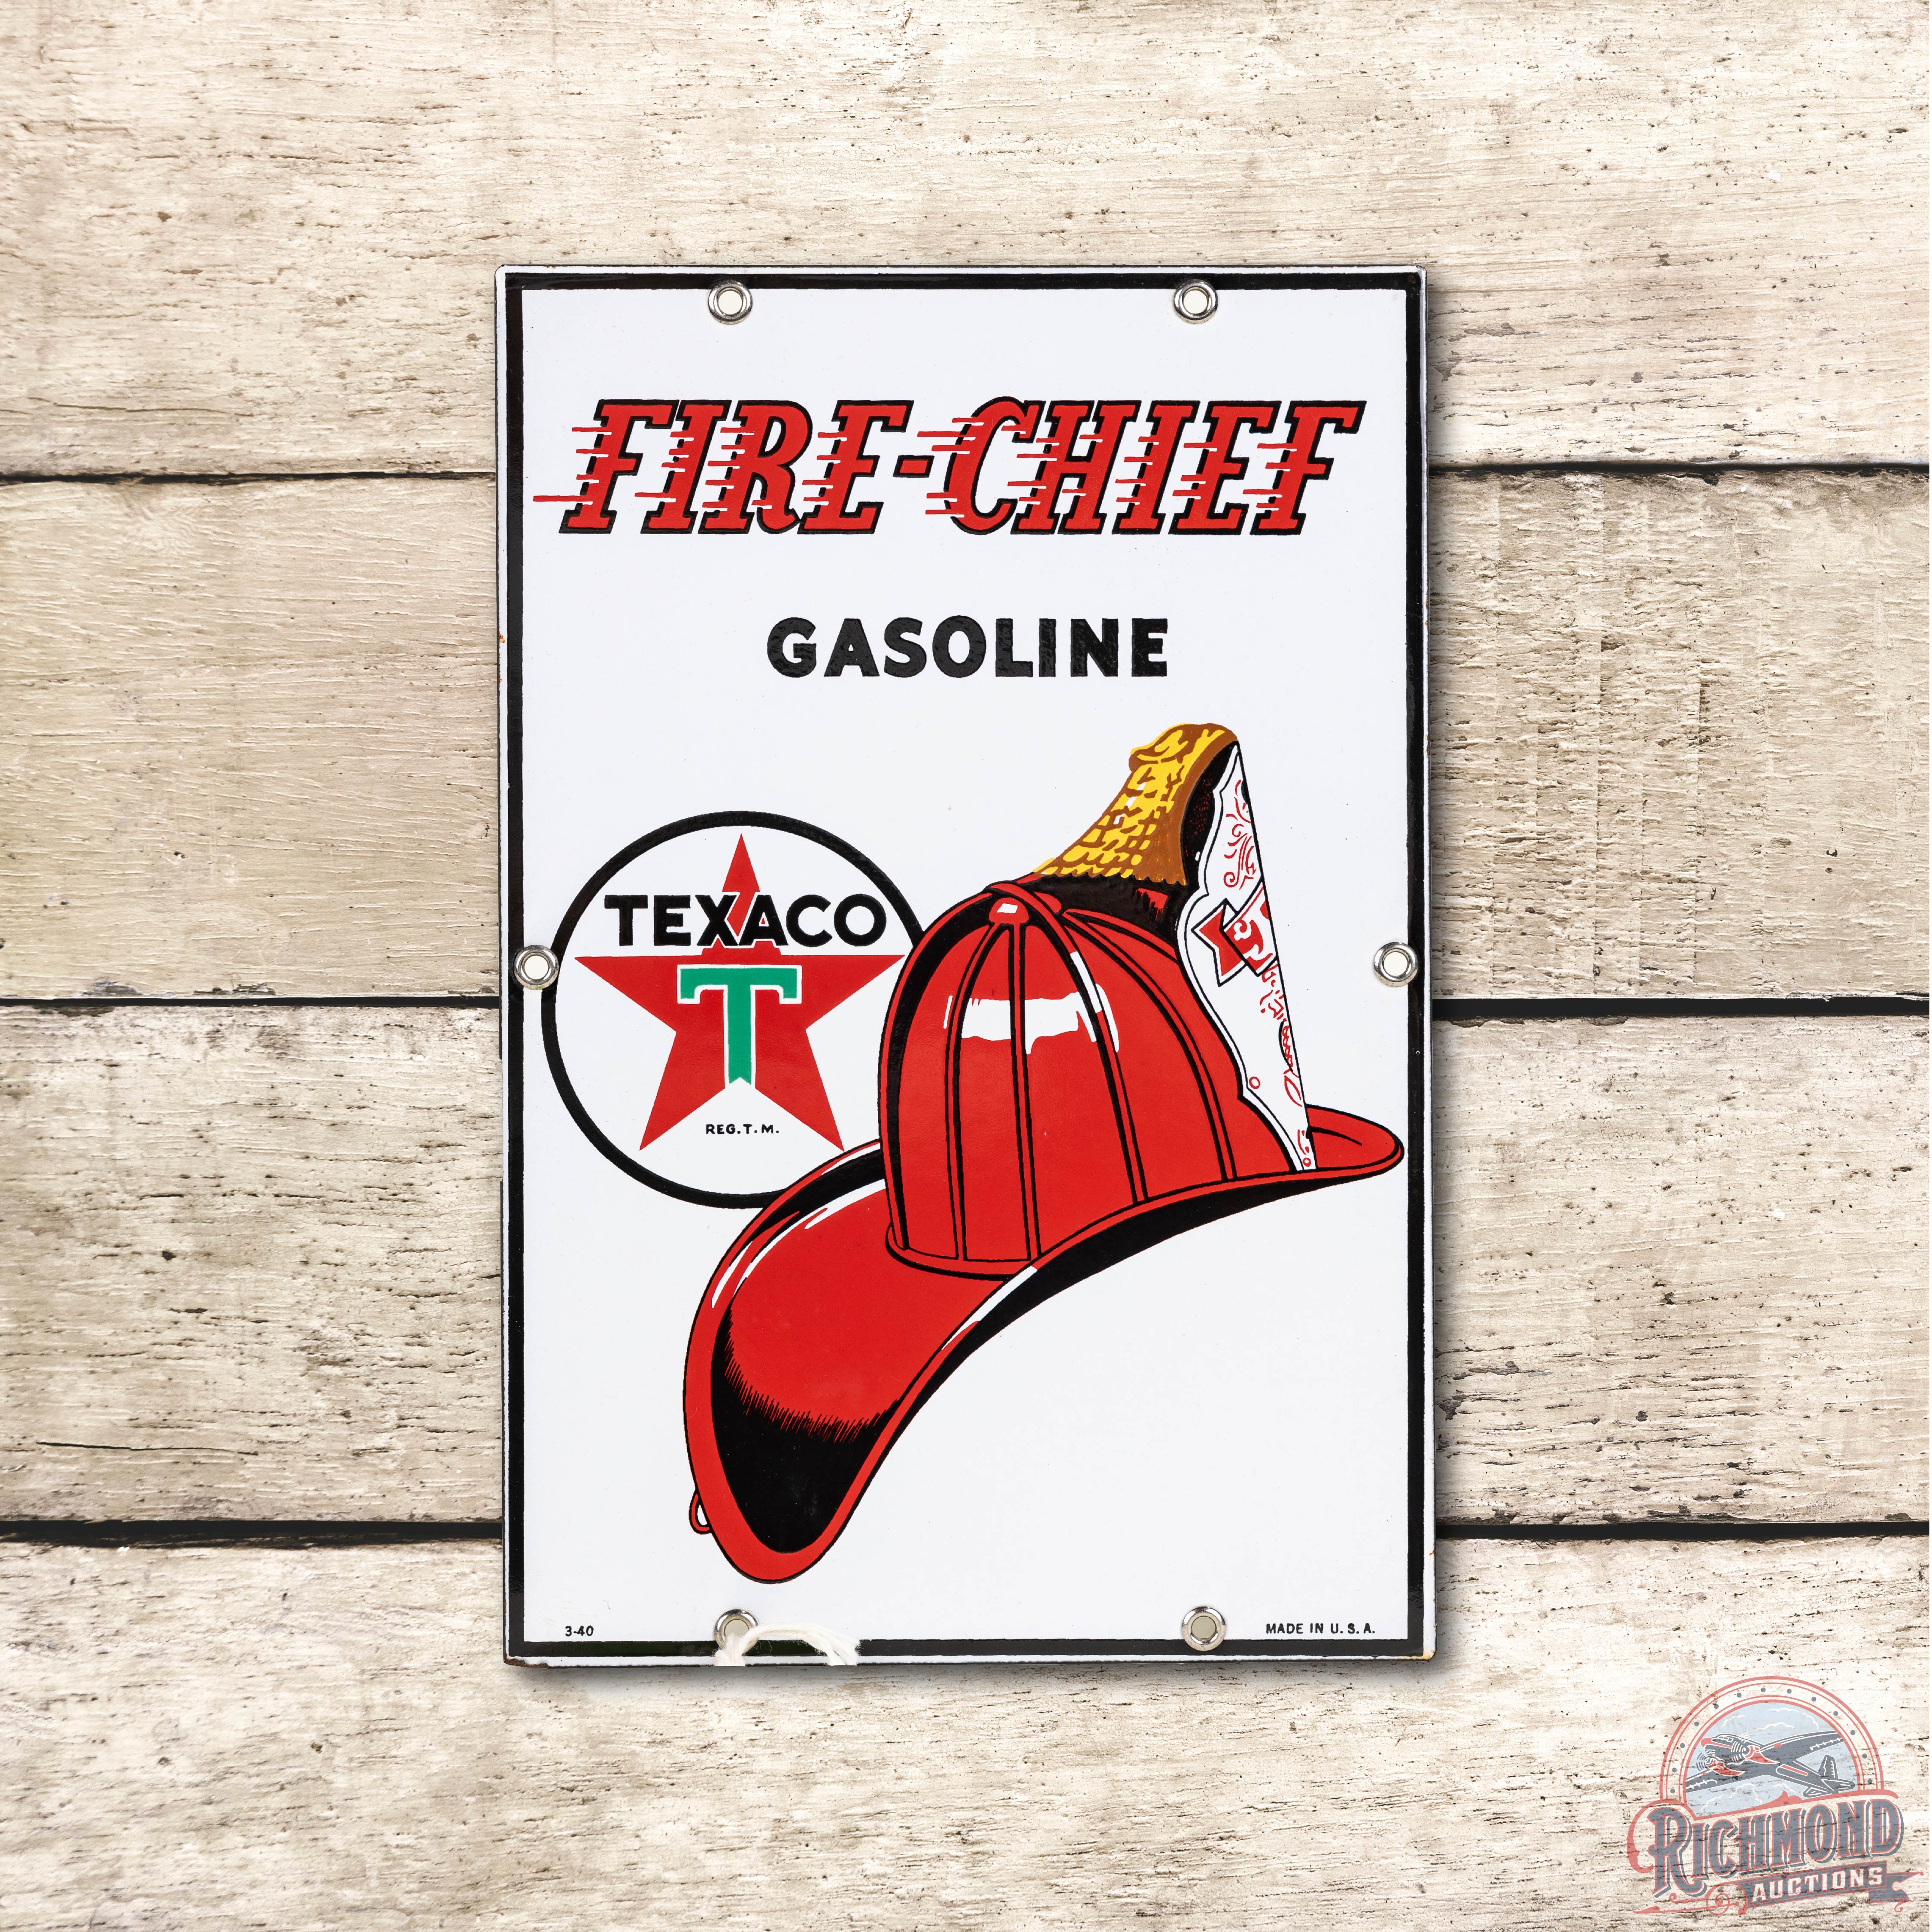 1940 Texaco Fire-Chief Gasoline Porcelain Pump Plate Sign (Small 